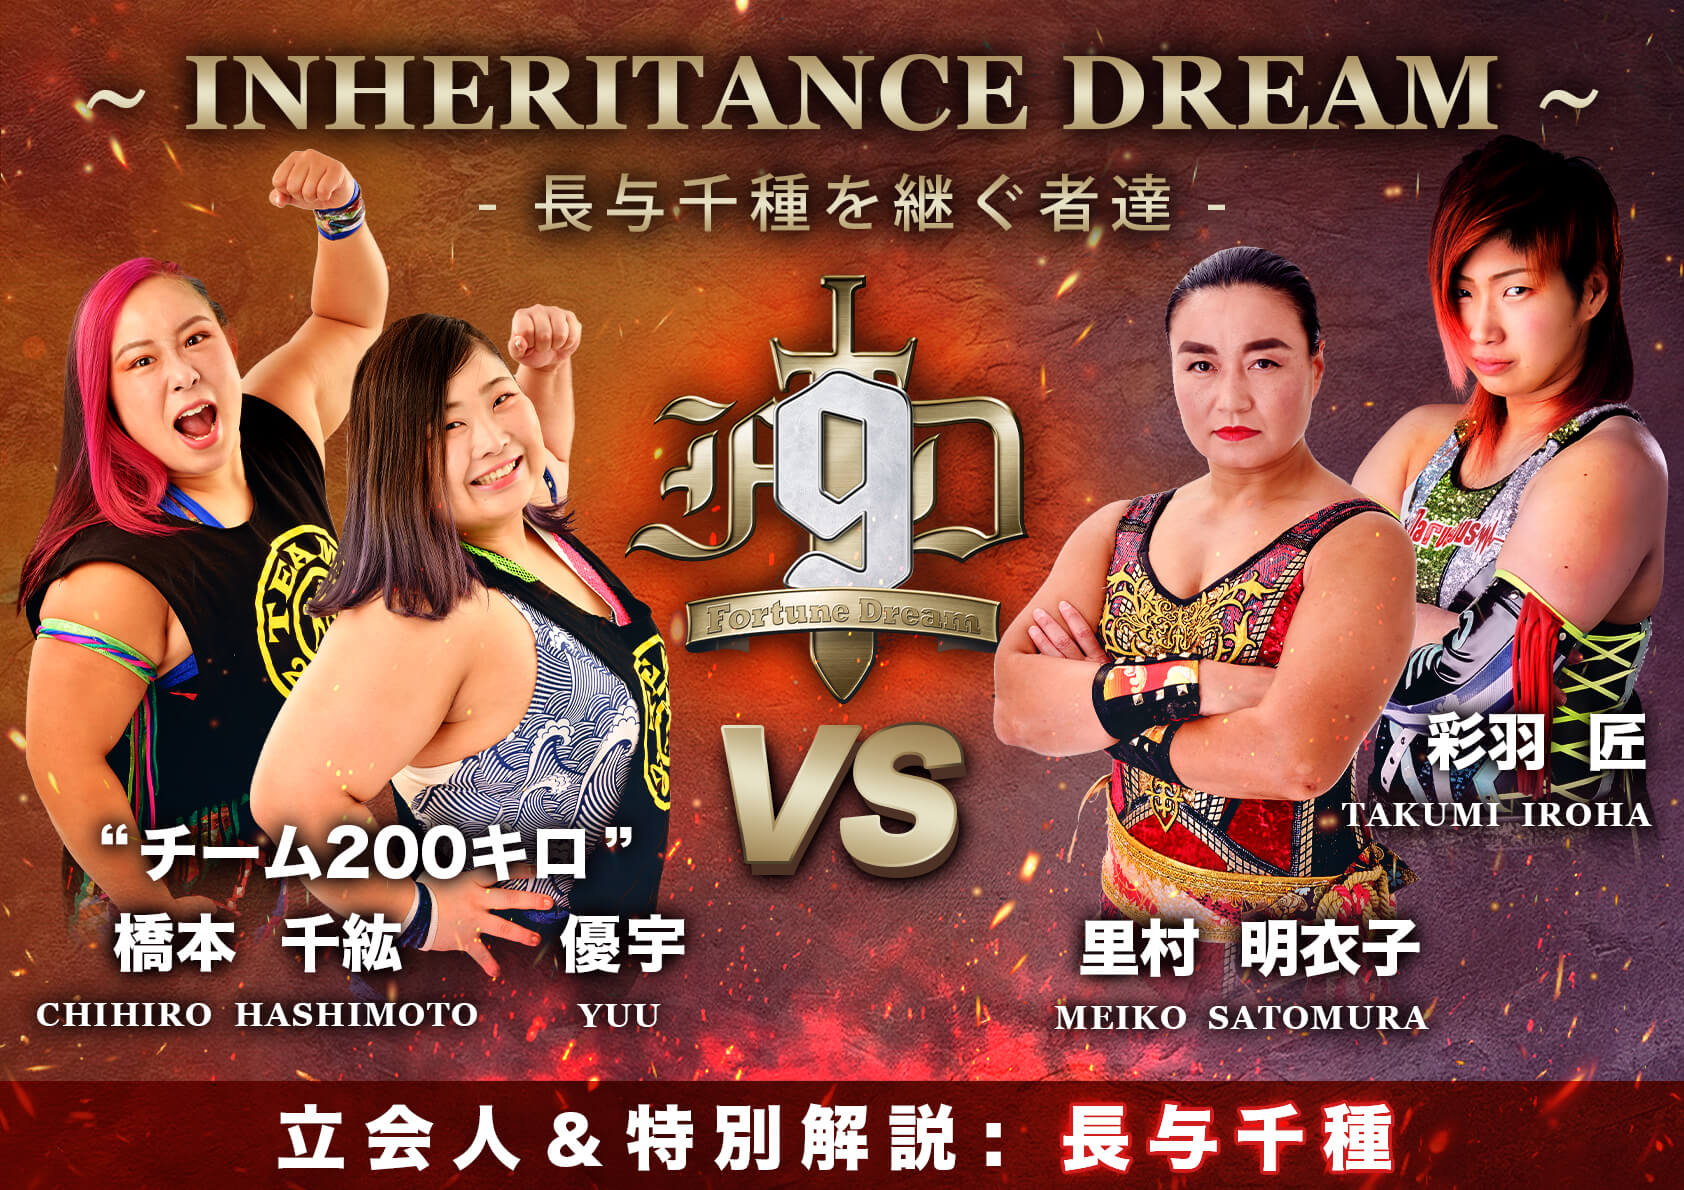 Fortune Dream match: Inheritance Dream